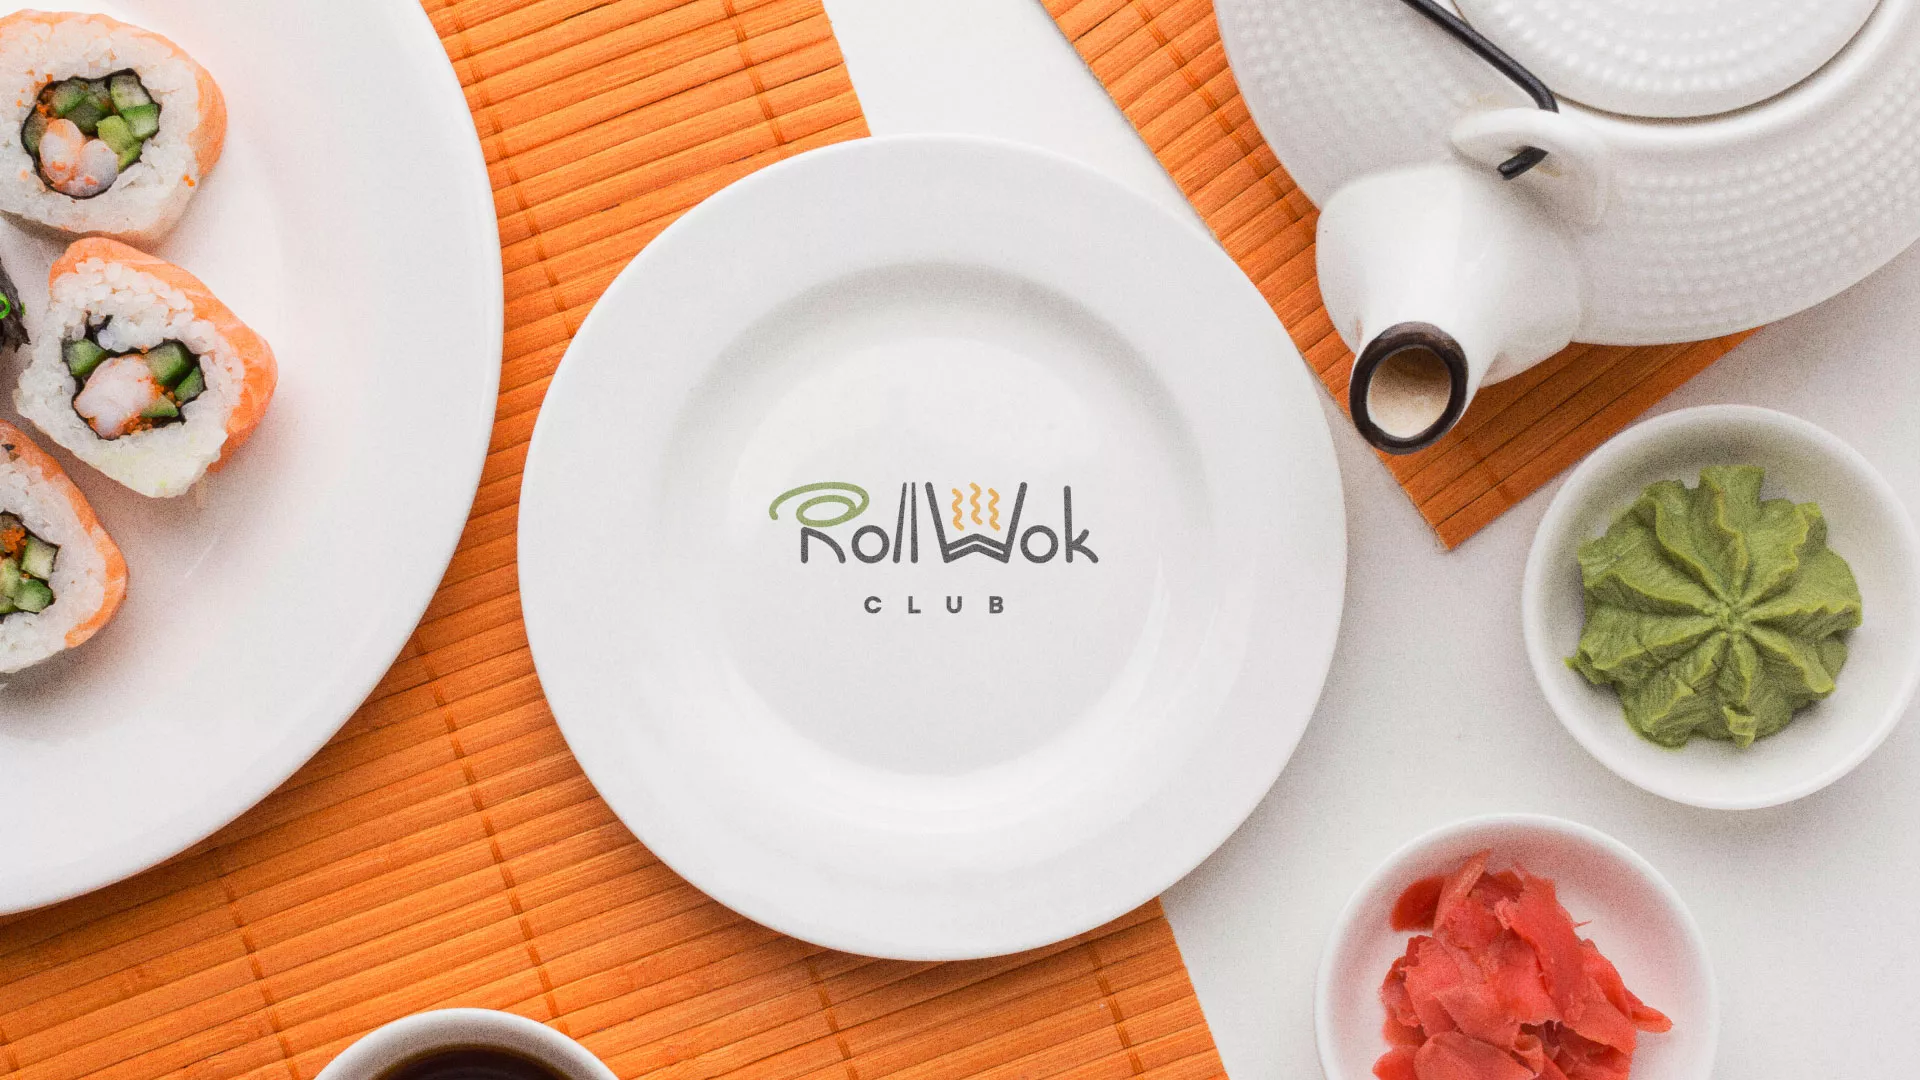 Разработка логотипа и фирменного стиля суши-бара «Roll Wok Club» в Одинцово